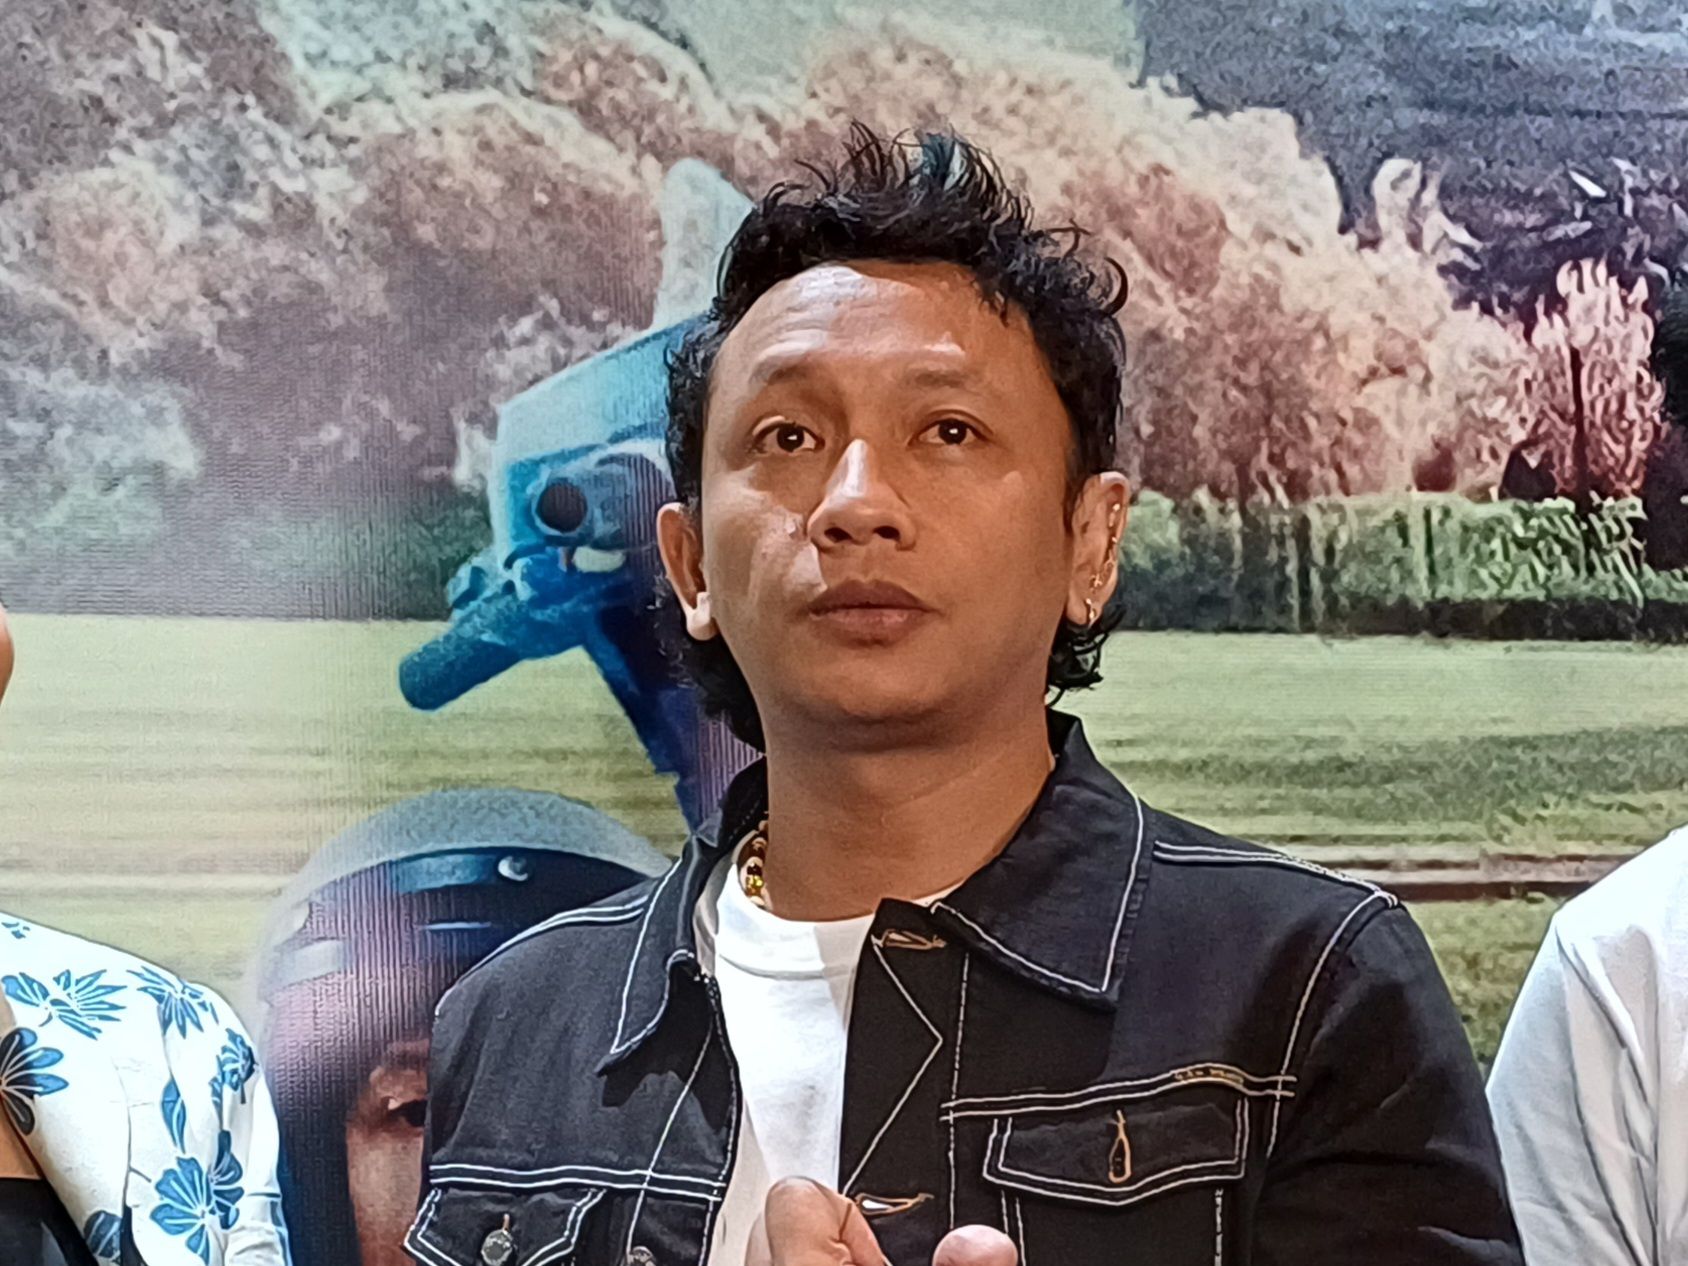 Erick Estrada Hampir Tinggalkan Jakarta gara-gara Ibunya Di-bully Netizen